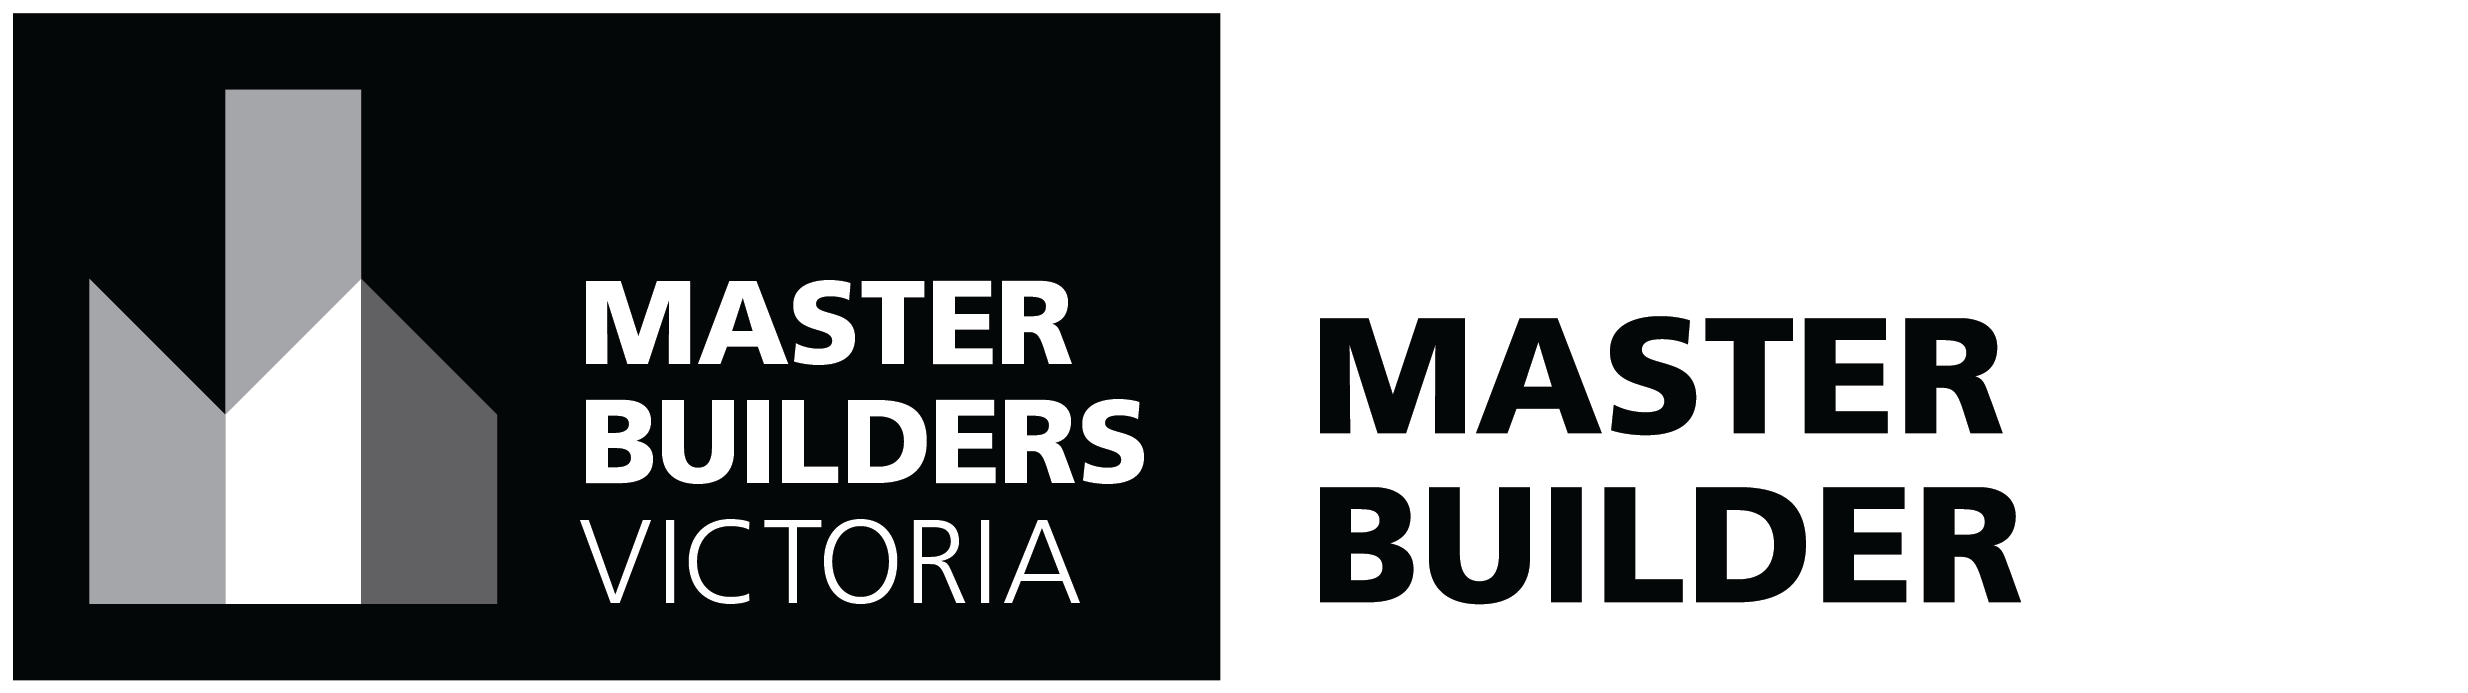 Master Builders Association Victoria Member - Master Builders Association